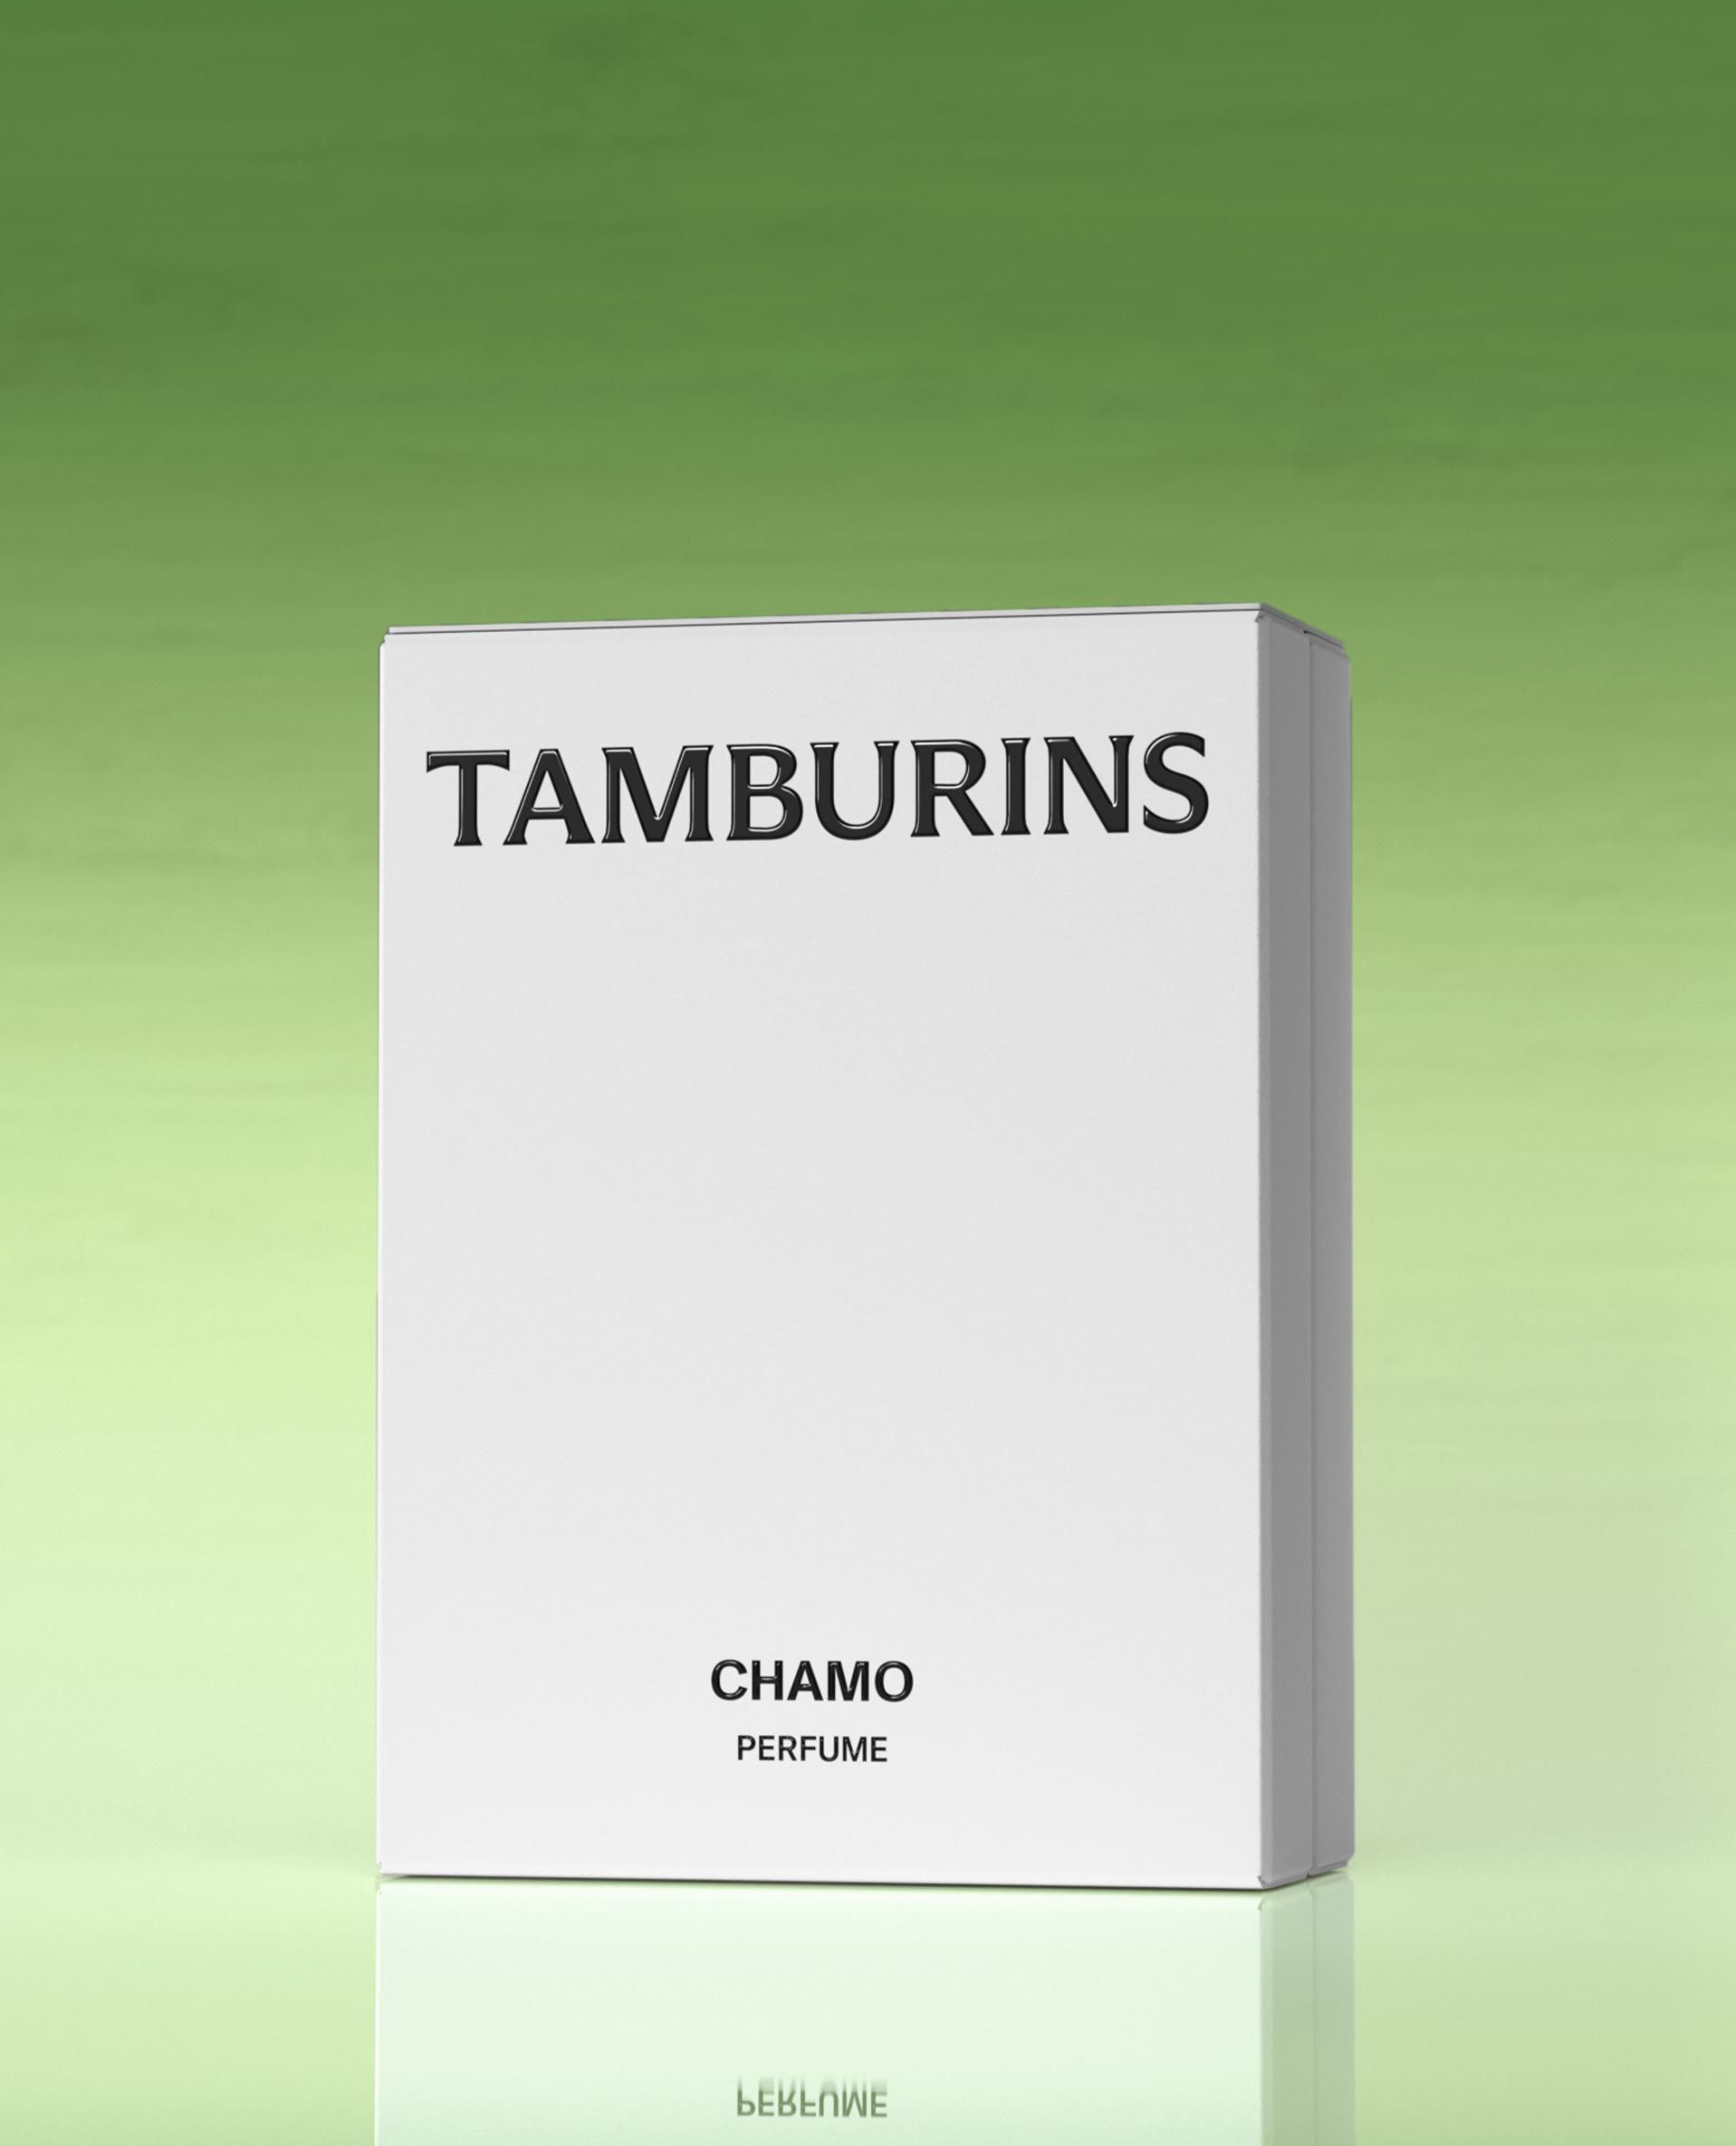 #Chamo 11ml / 50ml TAMBURINS Perfume bottle.